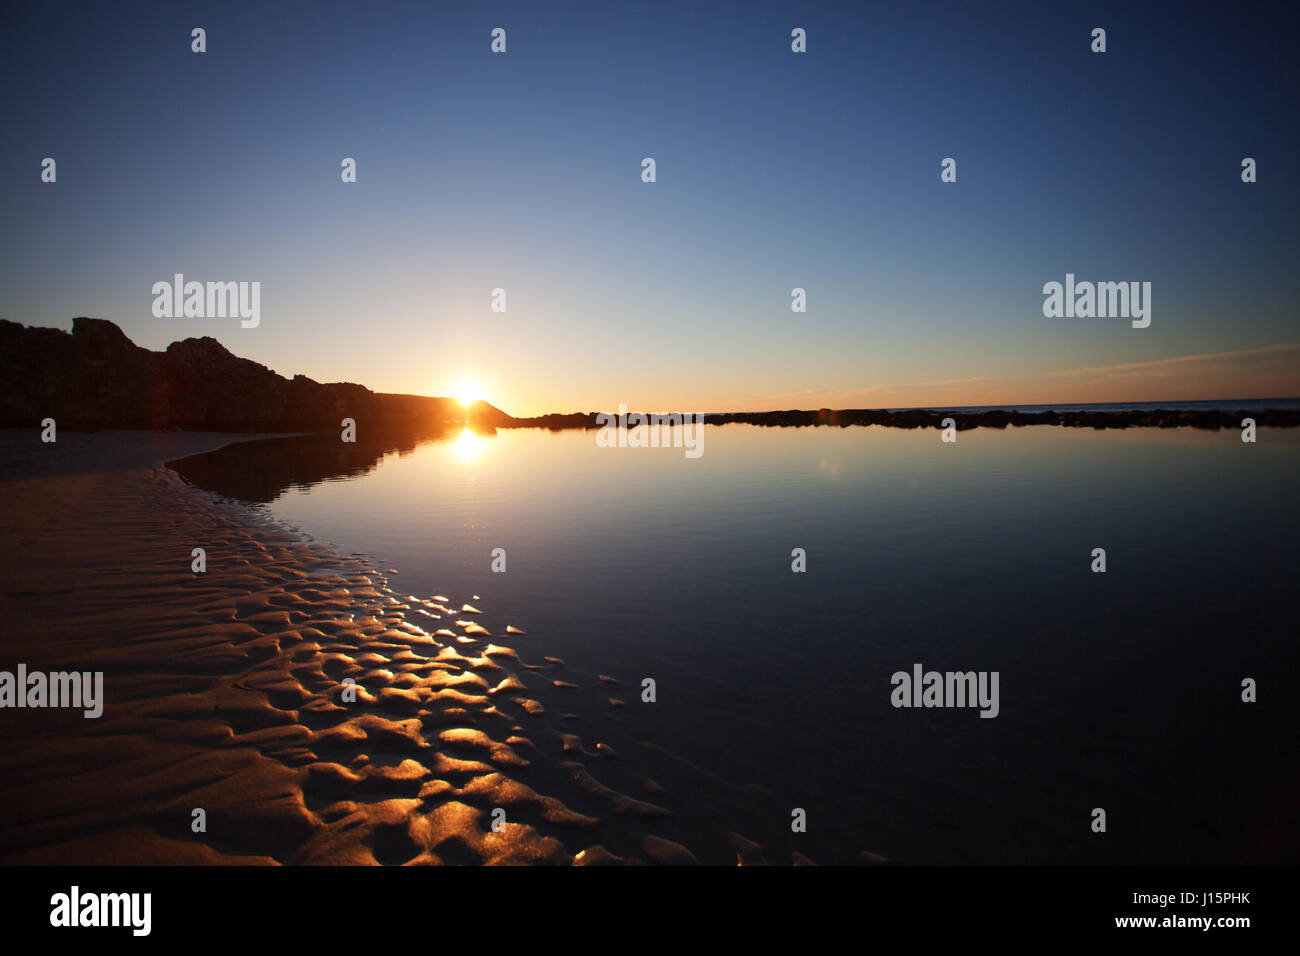 Scenic view of beautiful sunset on the beach. Kangaroo Island, South Australia. Stock Photo